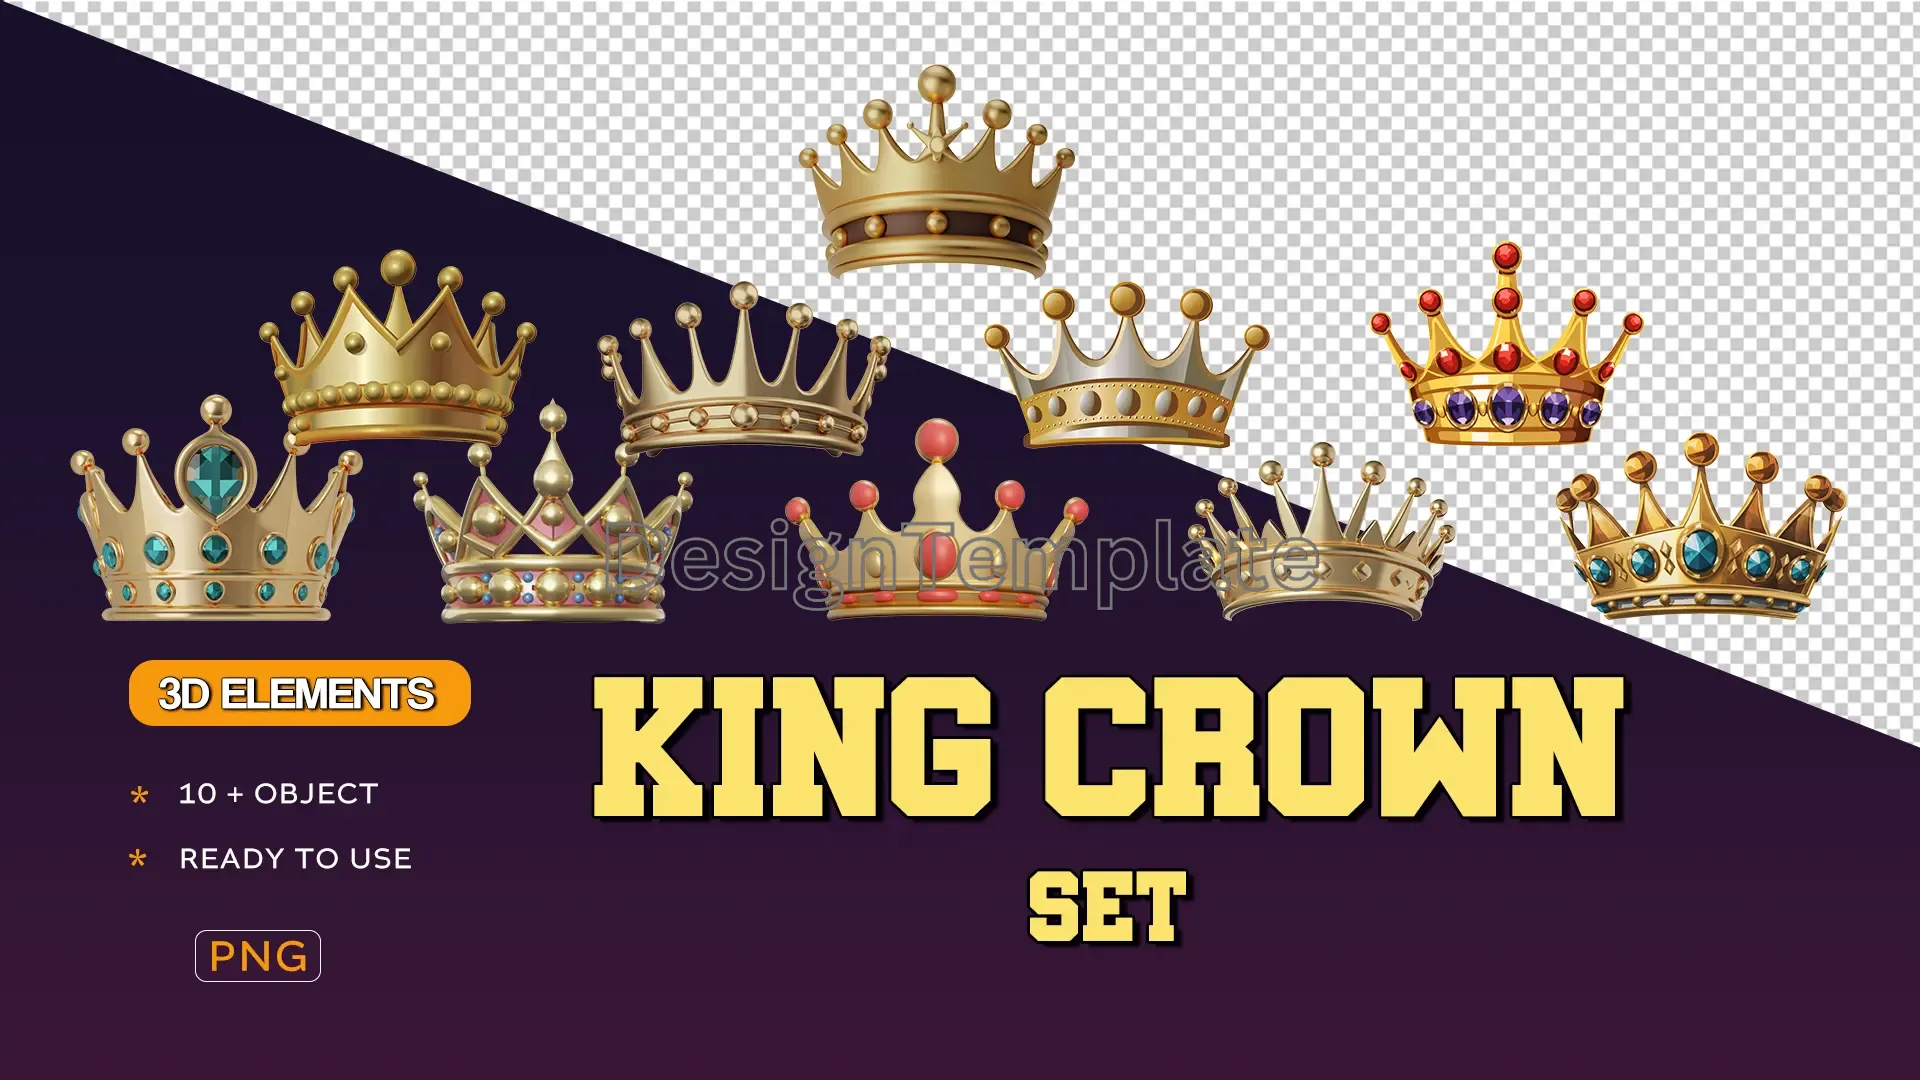 Crown Continuum 3D Royal Crowns Elements Pack